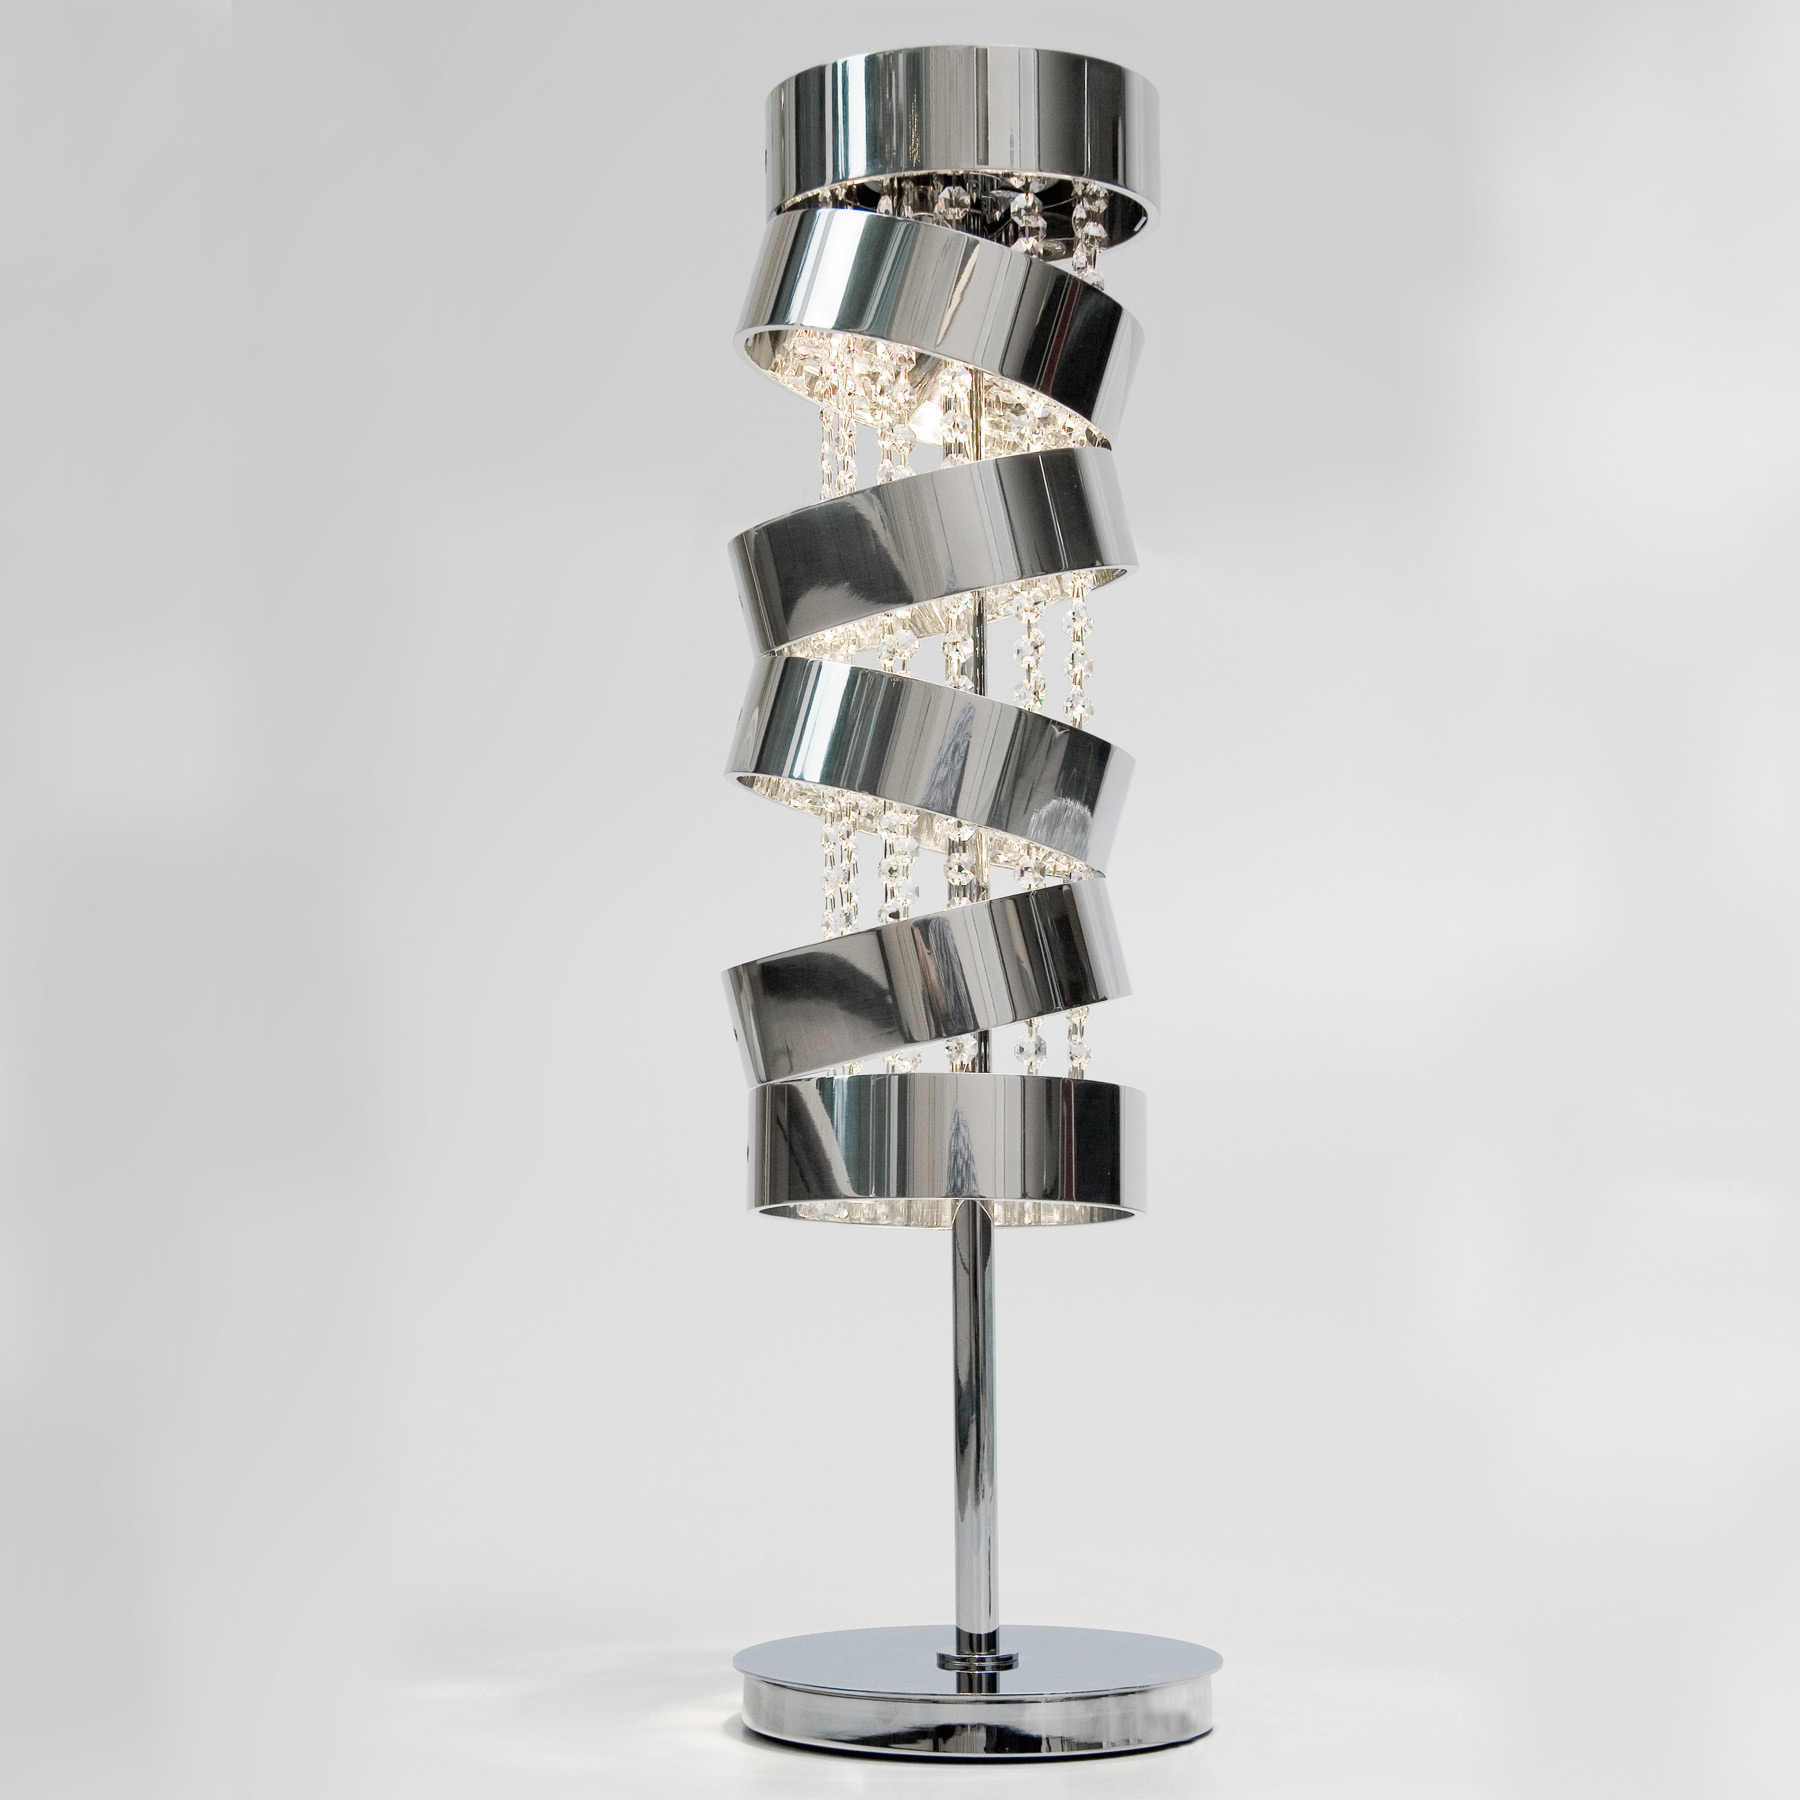 Swarovski crystal table lamp 6